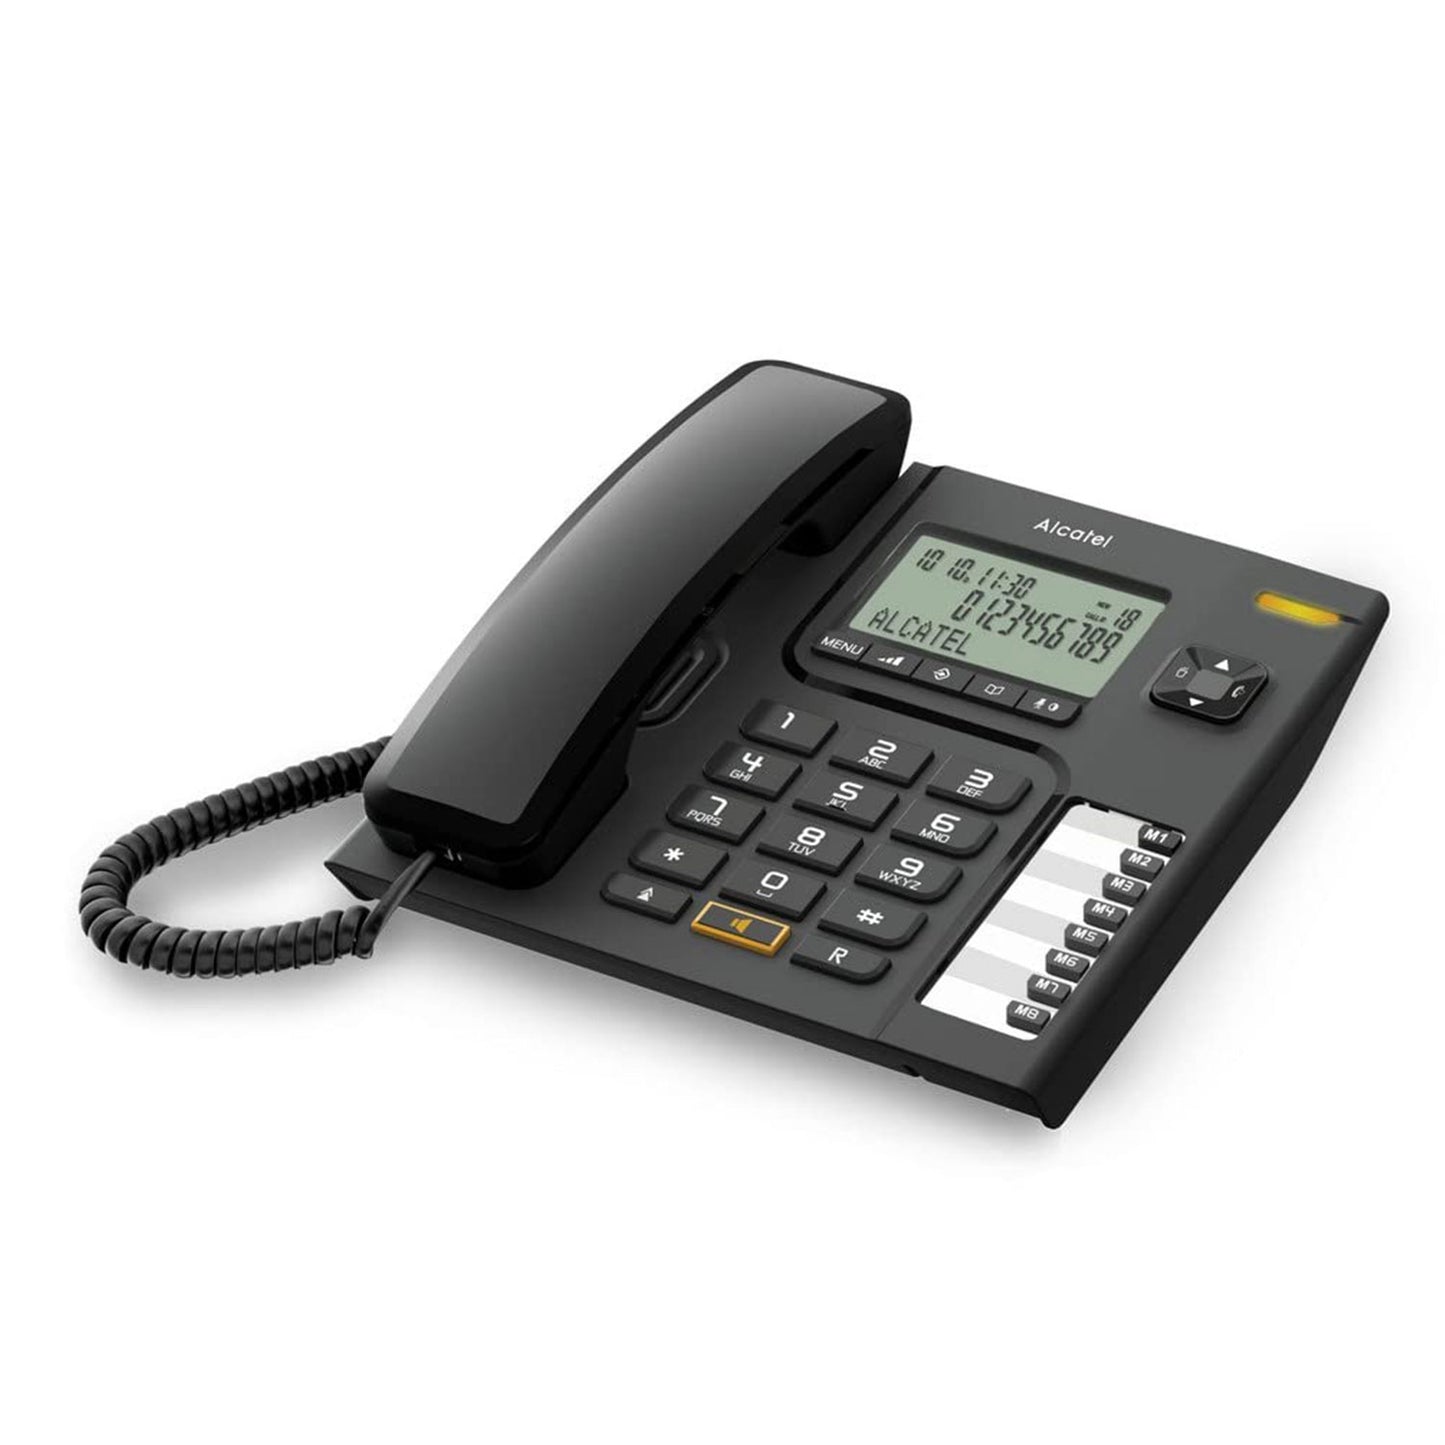 Alcatel T76 Corded Landline Phone with Caller ID and Speakerphone Black (Pack Of 2)